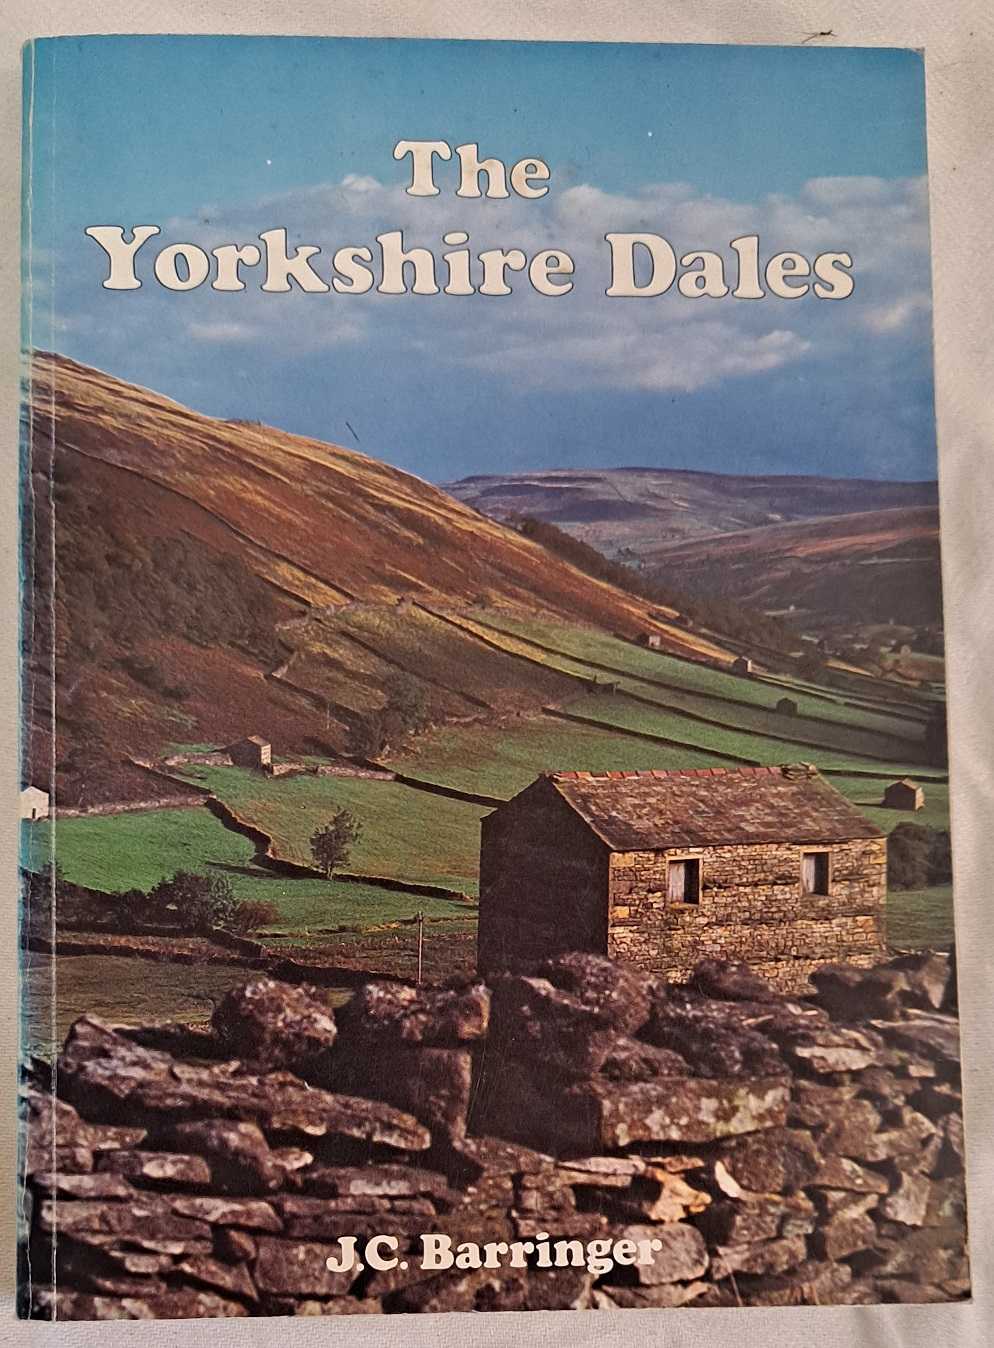 J C Barringer - The Yorkshire Dales